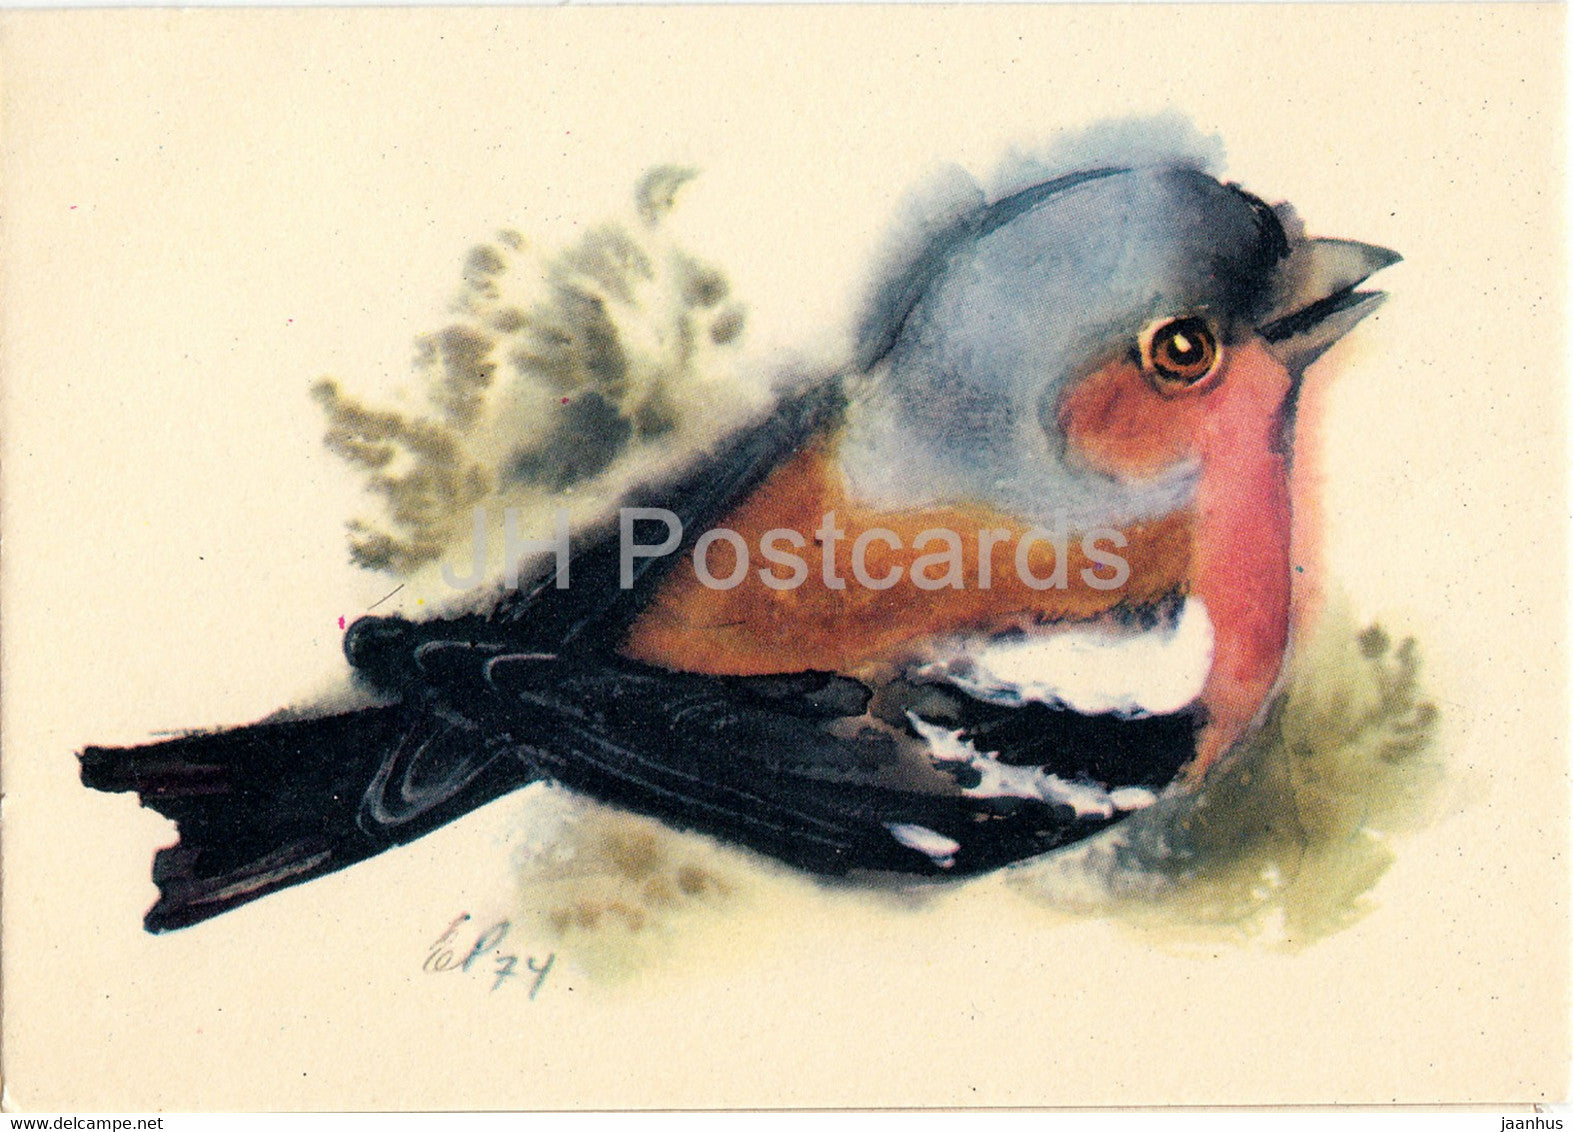 Common chaffinch - Fringilla coelebs - illustration by E. Pikk - 1975 - Estonia USSR - unused - JH Postcards